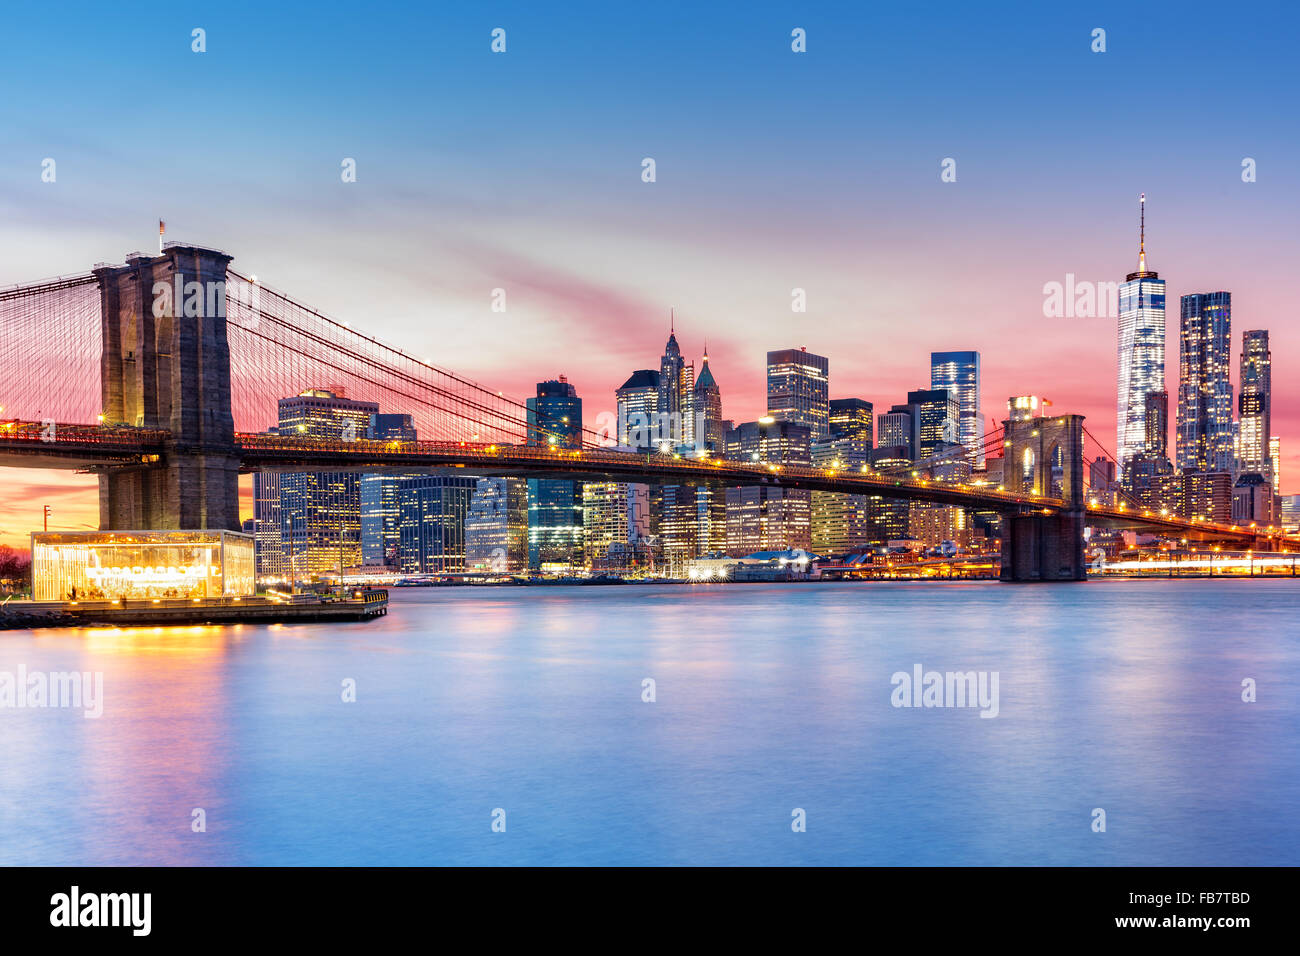 Brooklyn Bridge and the Lower Manhattan skyline under a purple sunset Stock Photo